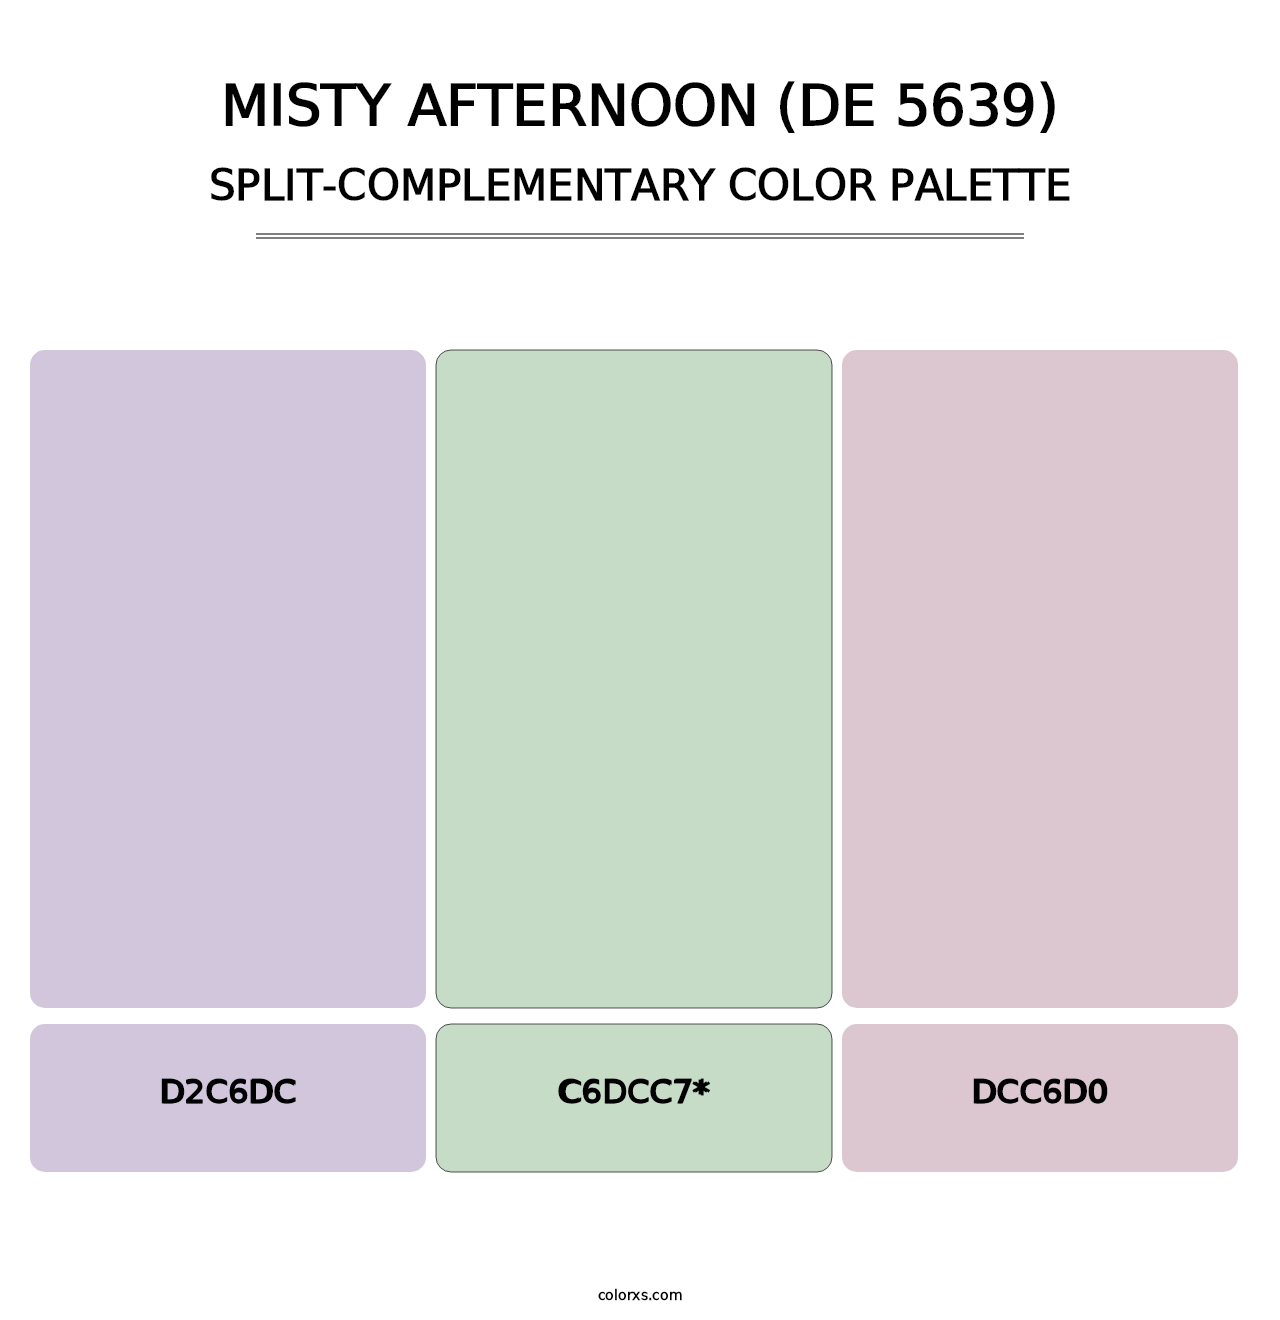 Misty Afternoon (DE 5639) - Split-Complementary Color Palette